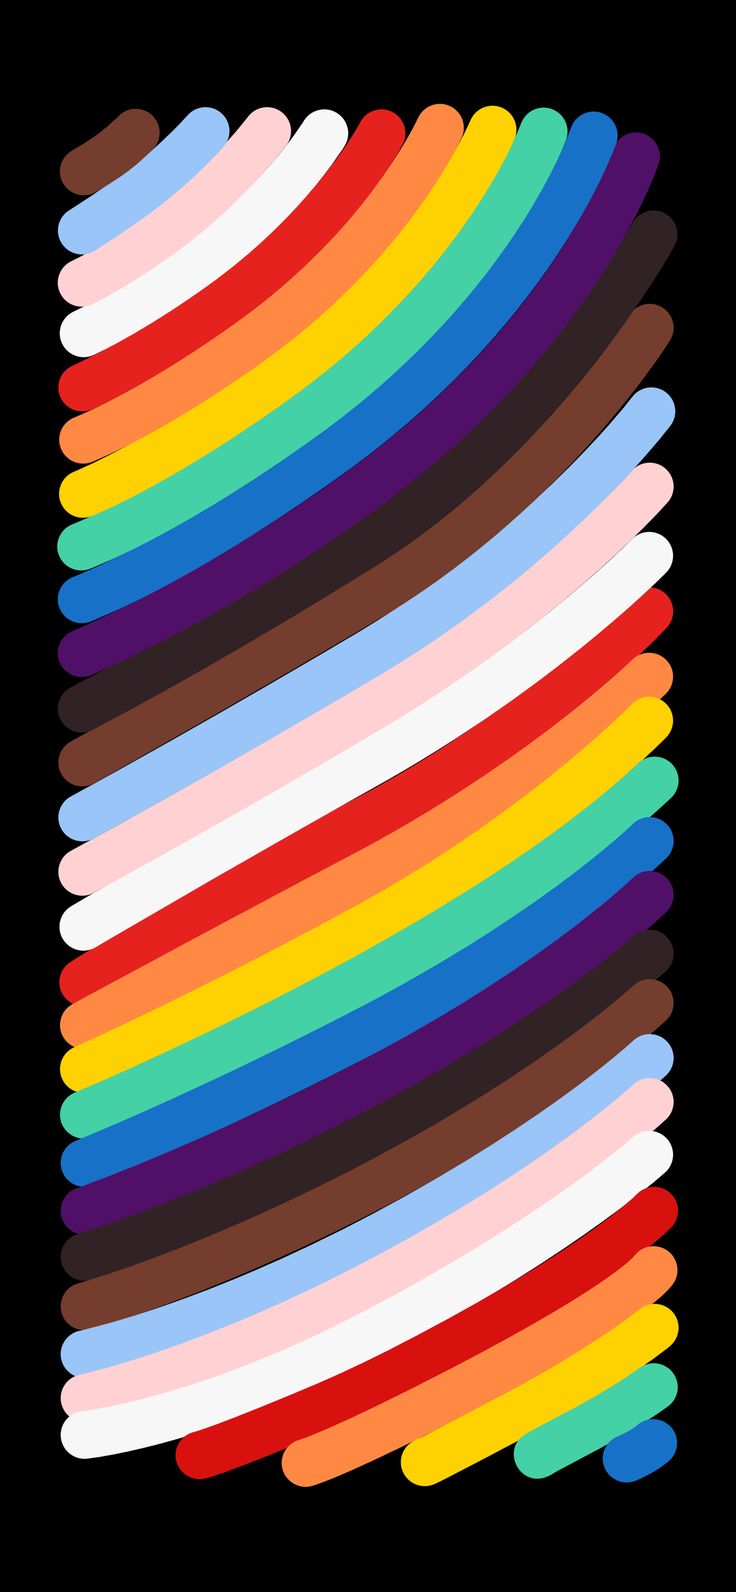 Apple Pride 2021 (Black) Central. Apple logo wallpaper, Rainbow wallpaper, Abstract iphone wallpaper